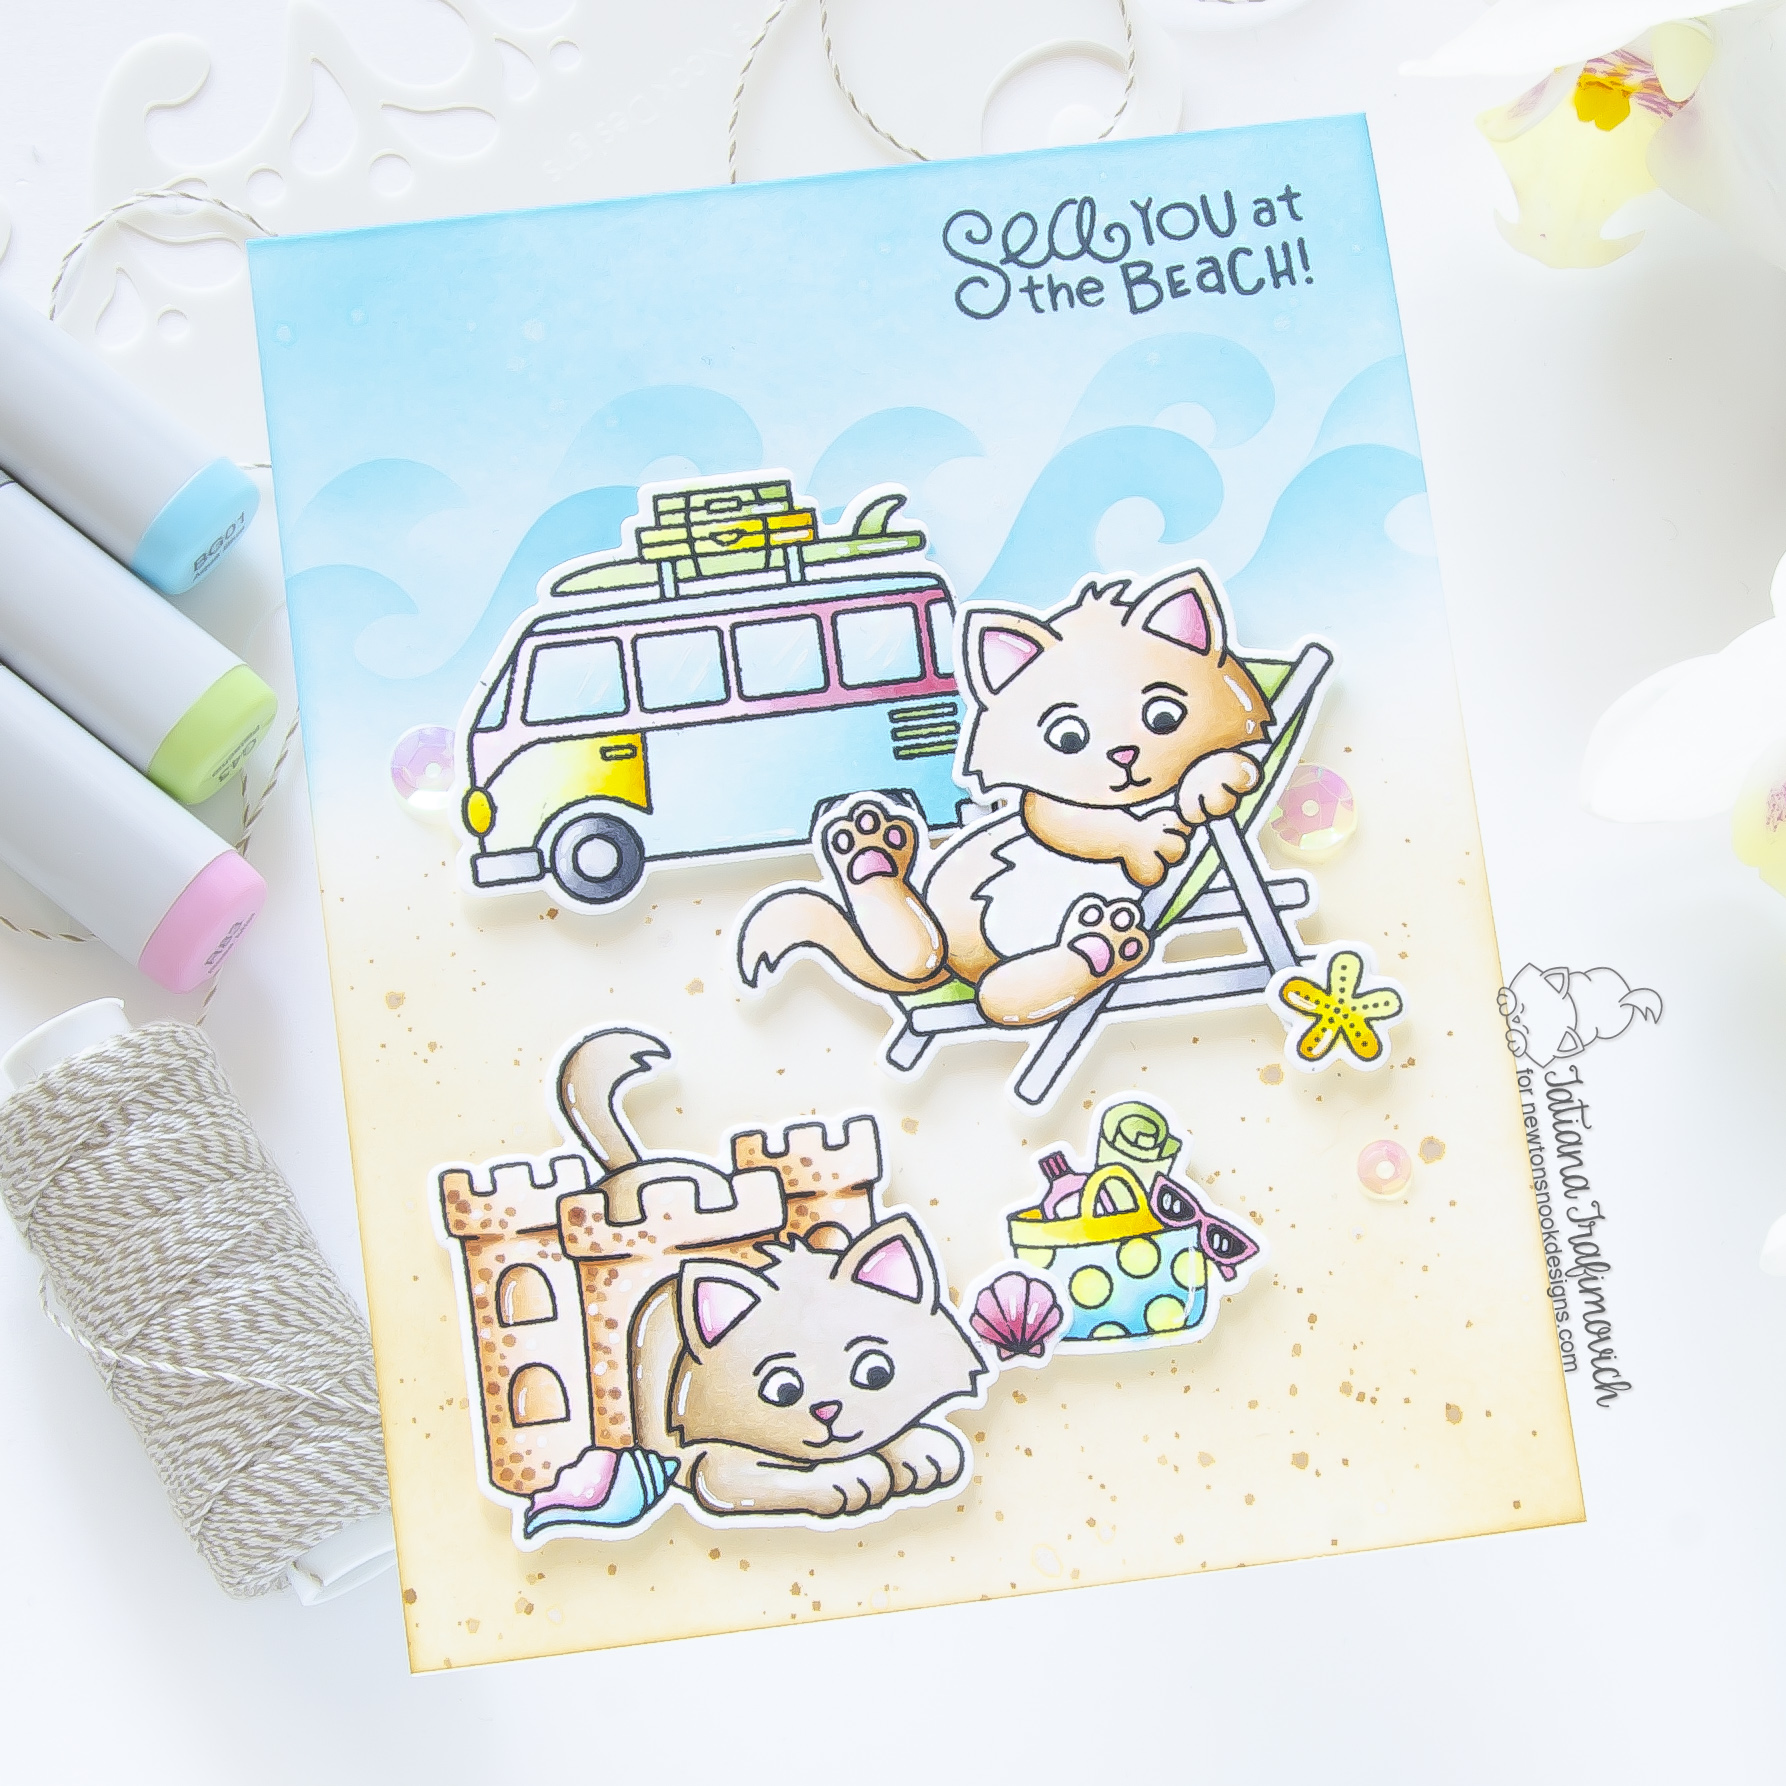 SEA You At The Beach! #handmade card by Tatiana Trafimovich #tatianacraftandart - Beach Kitten stamp set by Newton's Nook Designs #newtonsnook